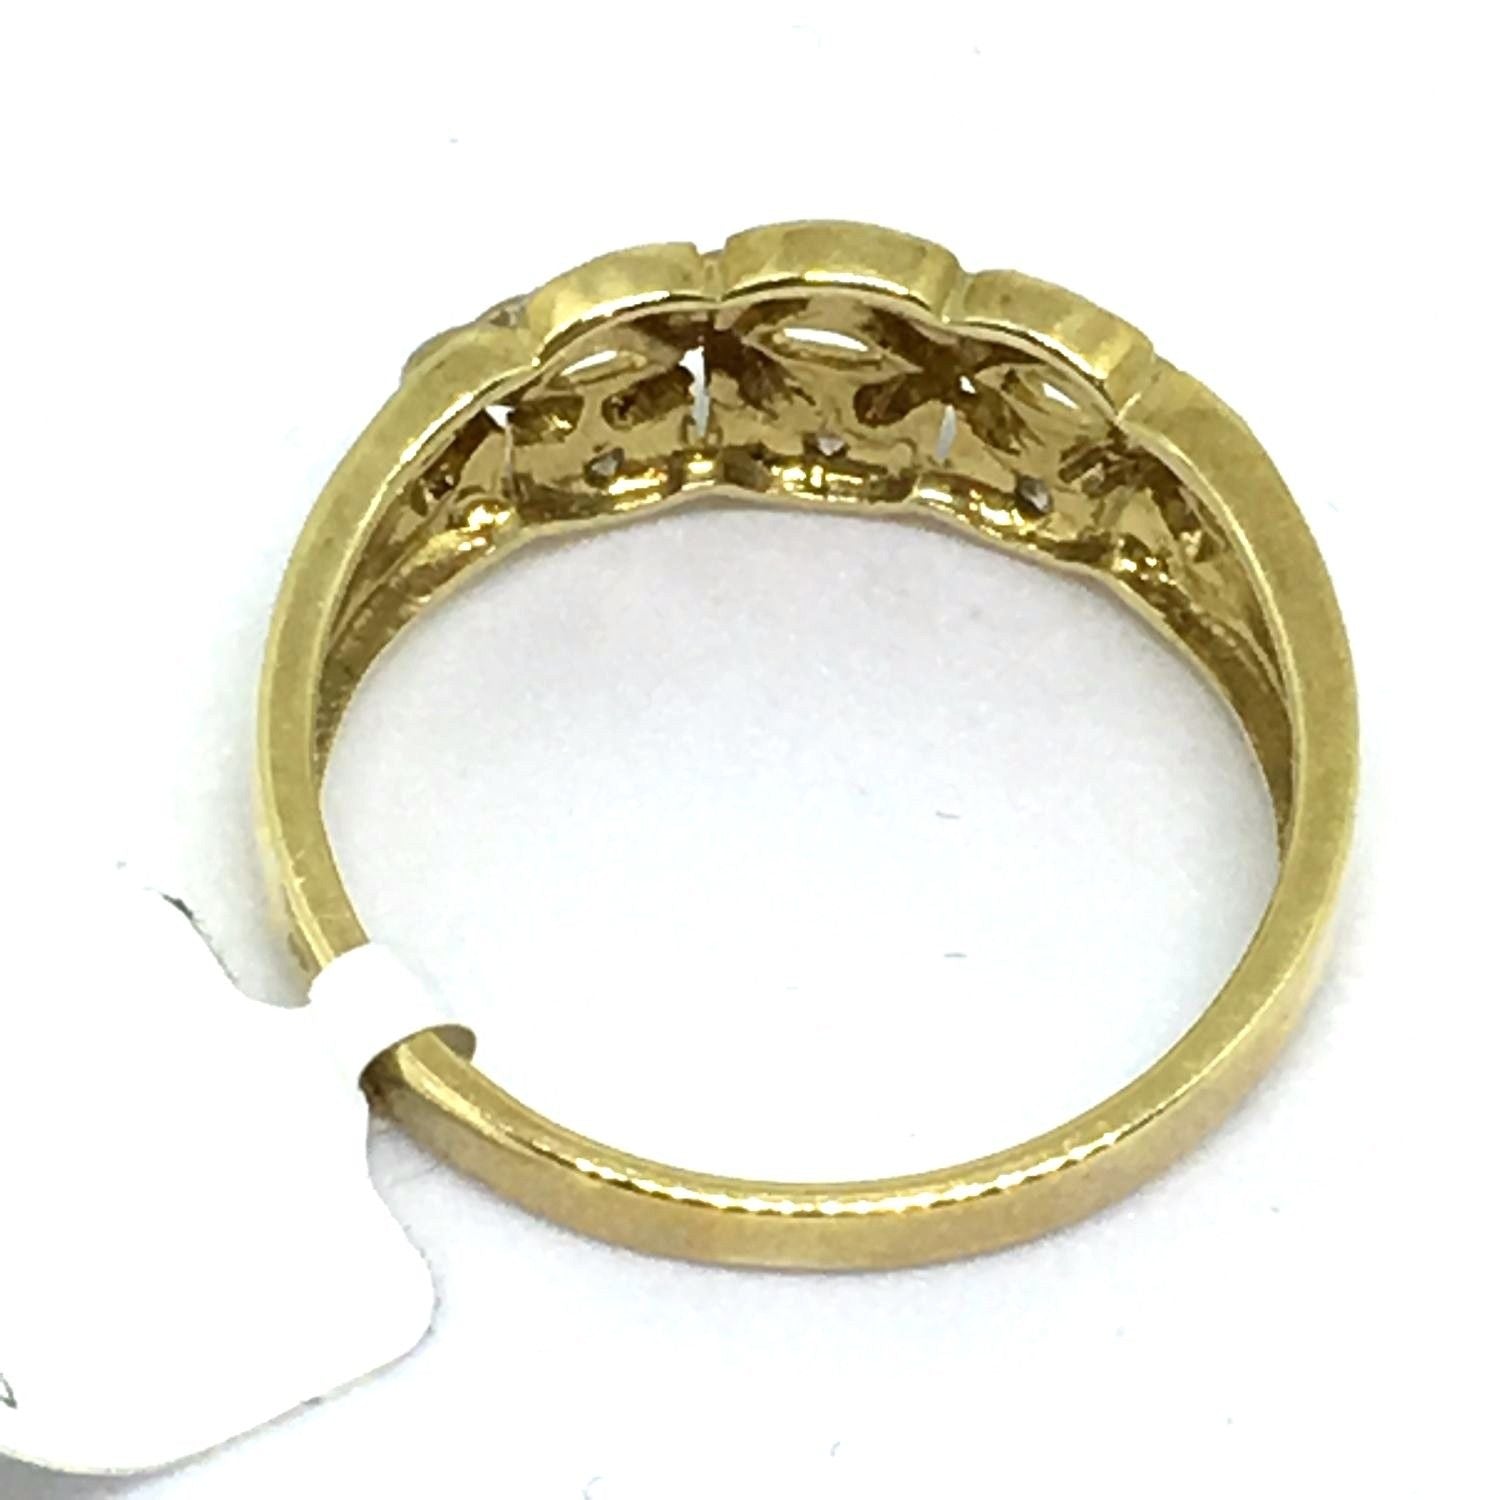 Genuine Diamond 14K Yellow Gold Ring $410 NWT Size 7